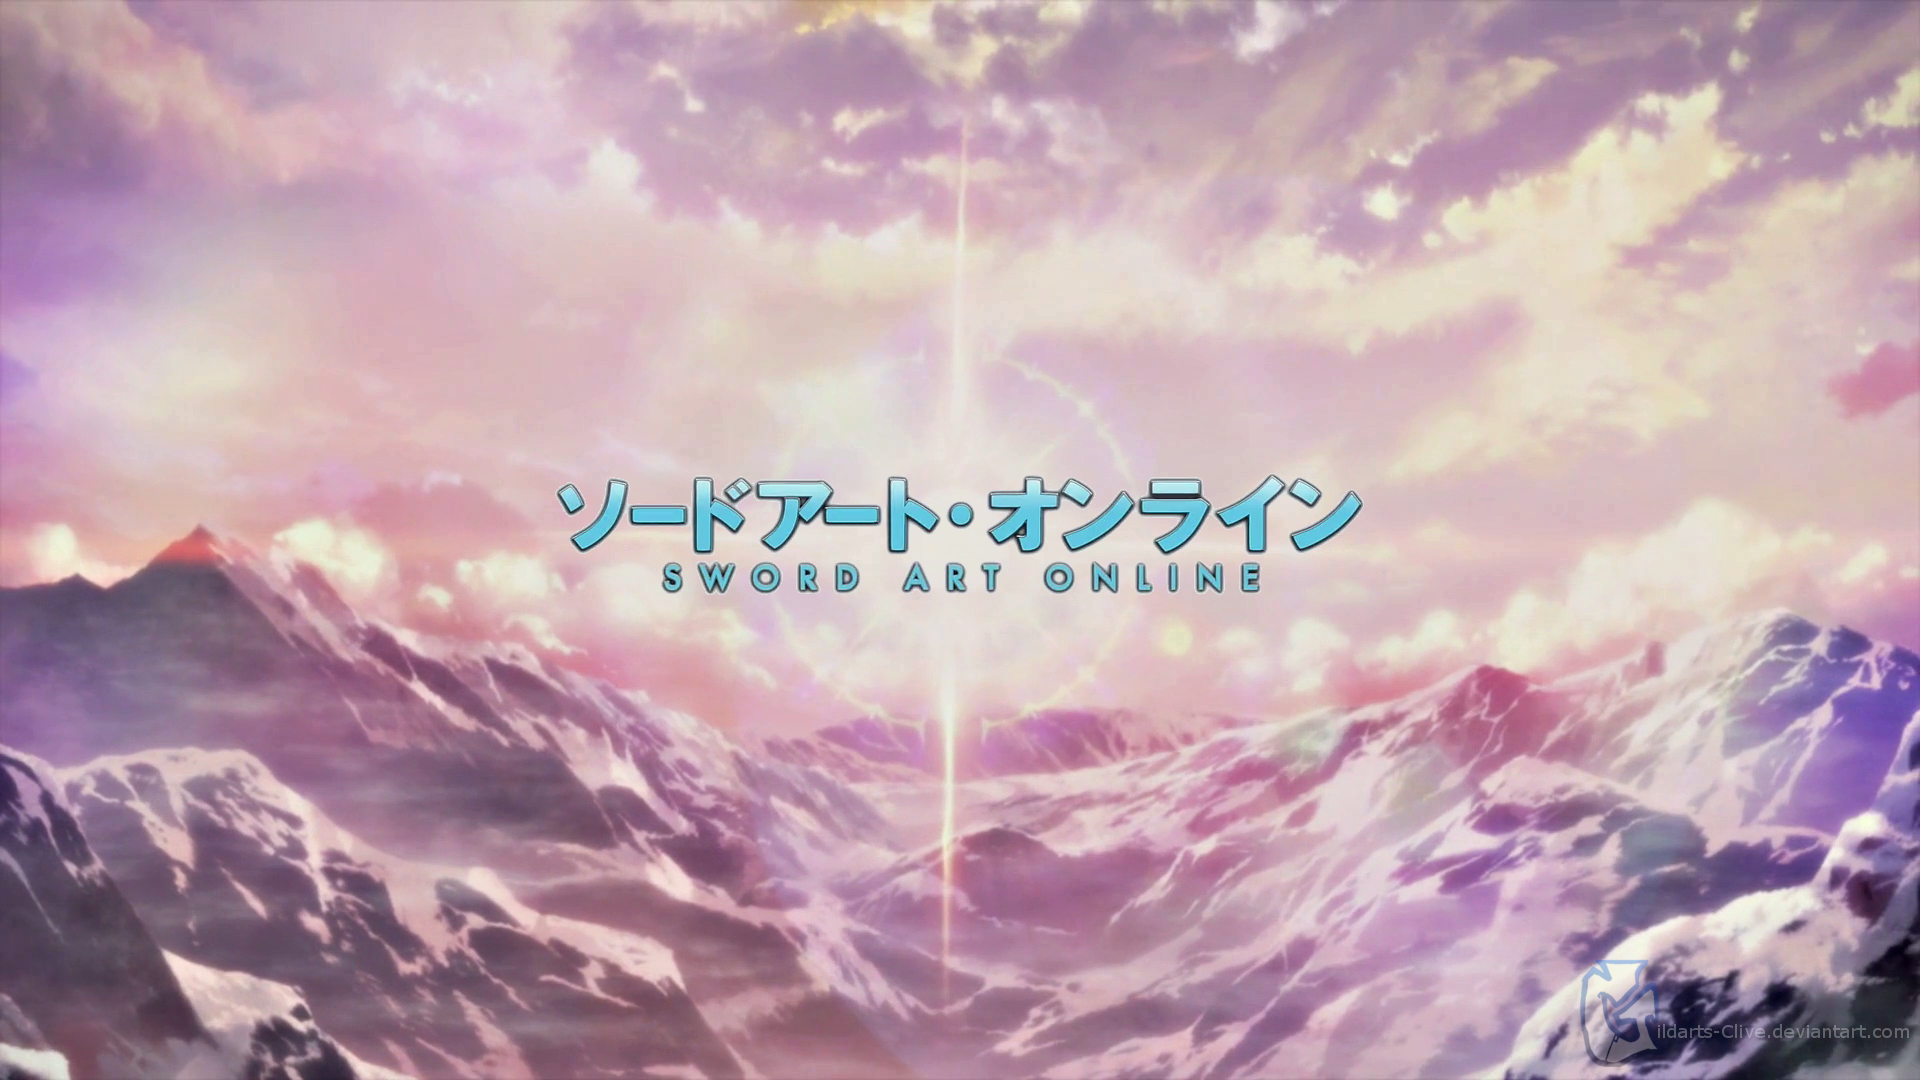 Sword Art Online wallpaper, logo, landscape, anime, mountains